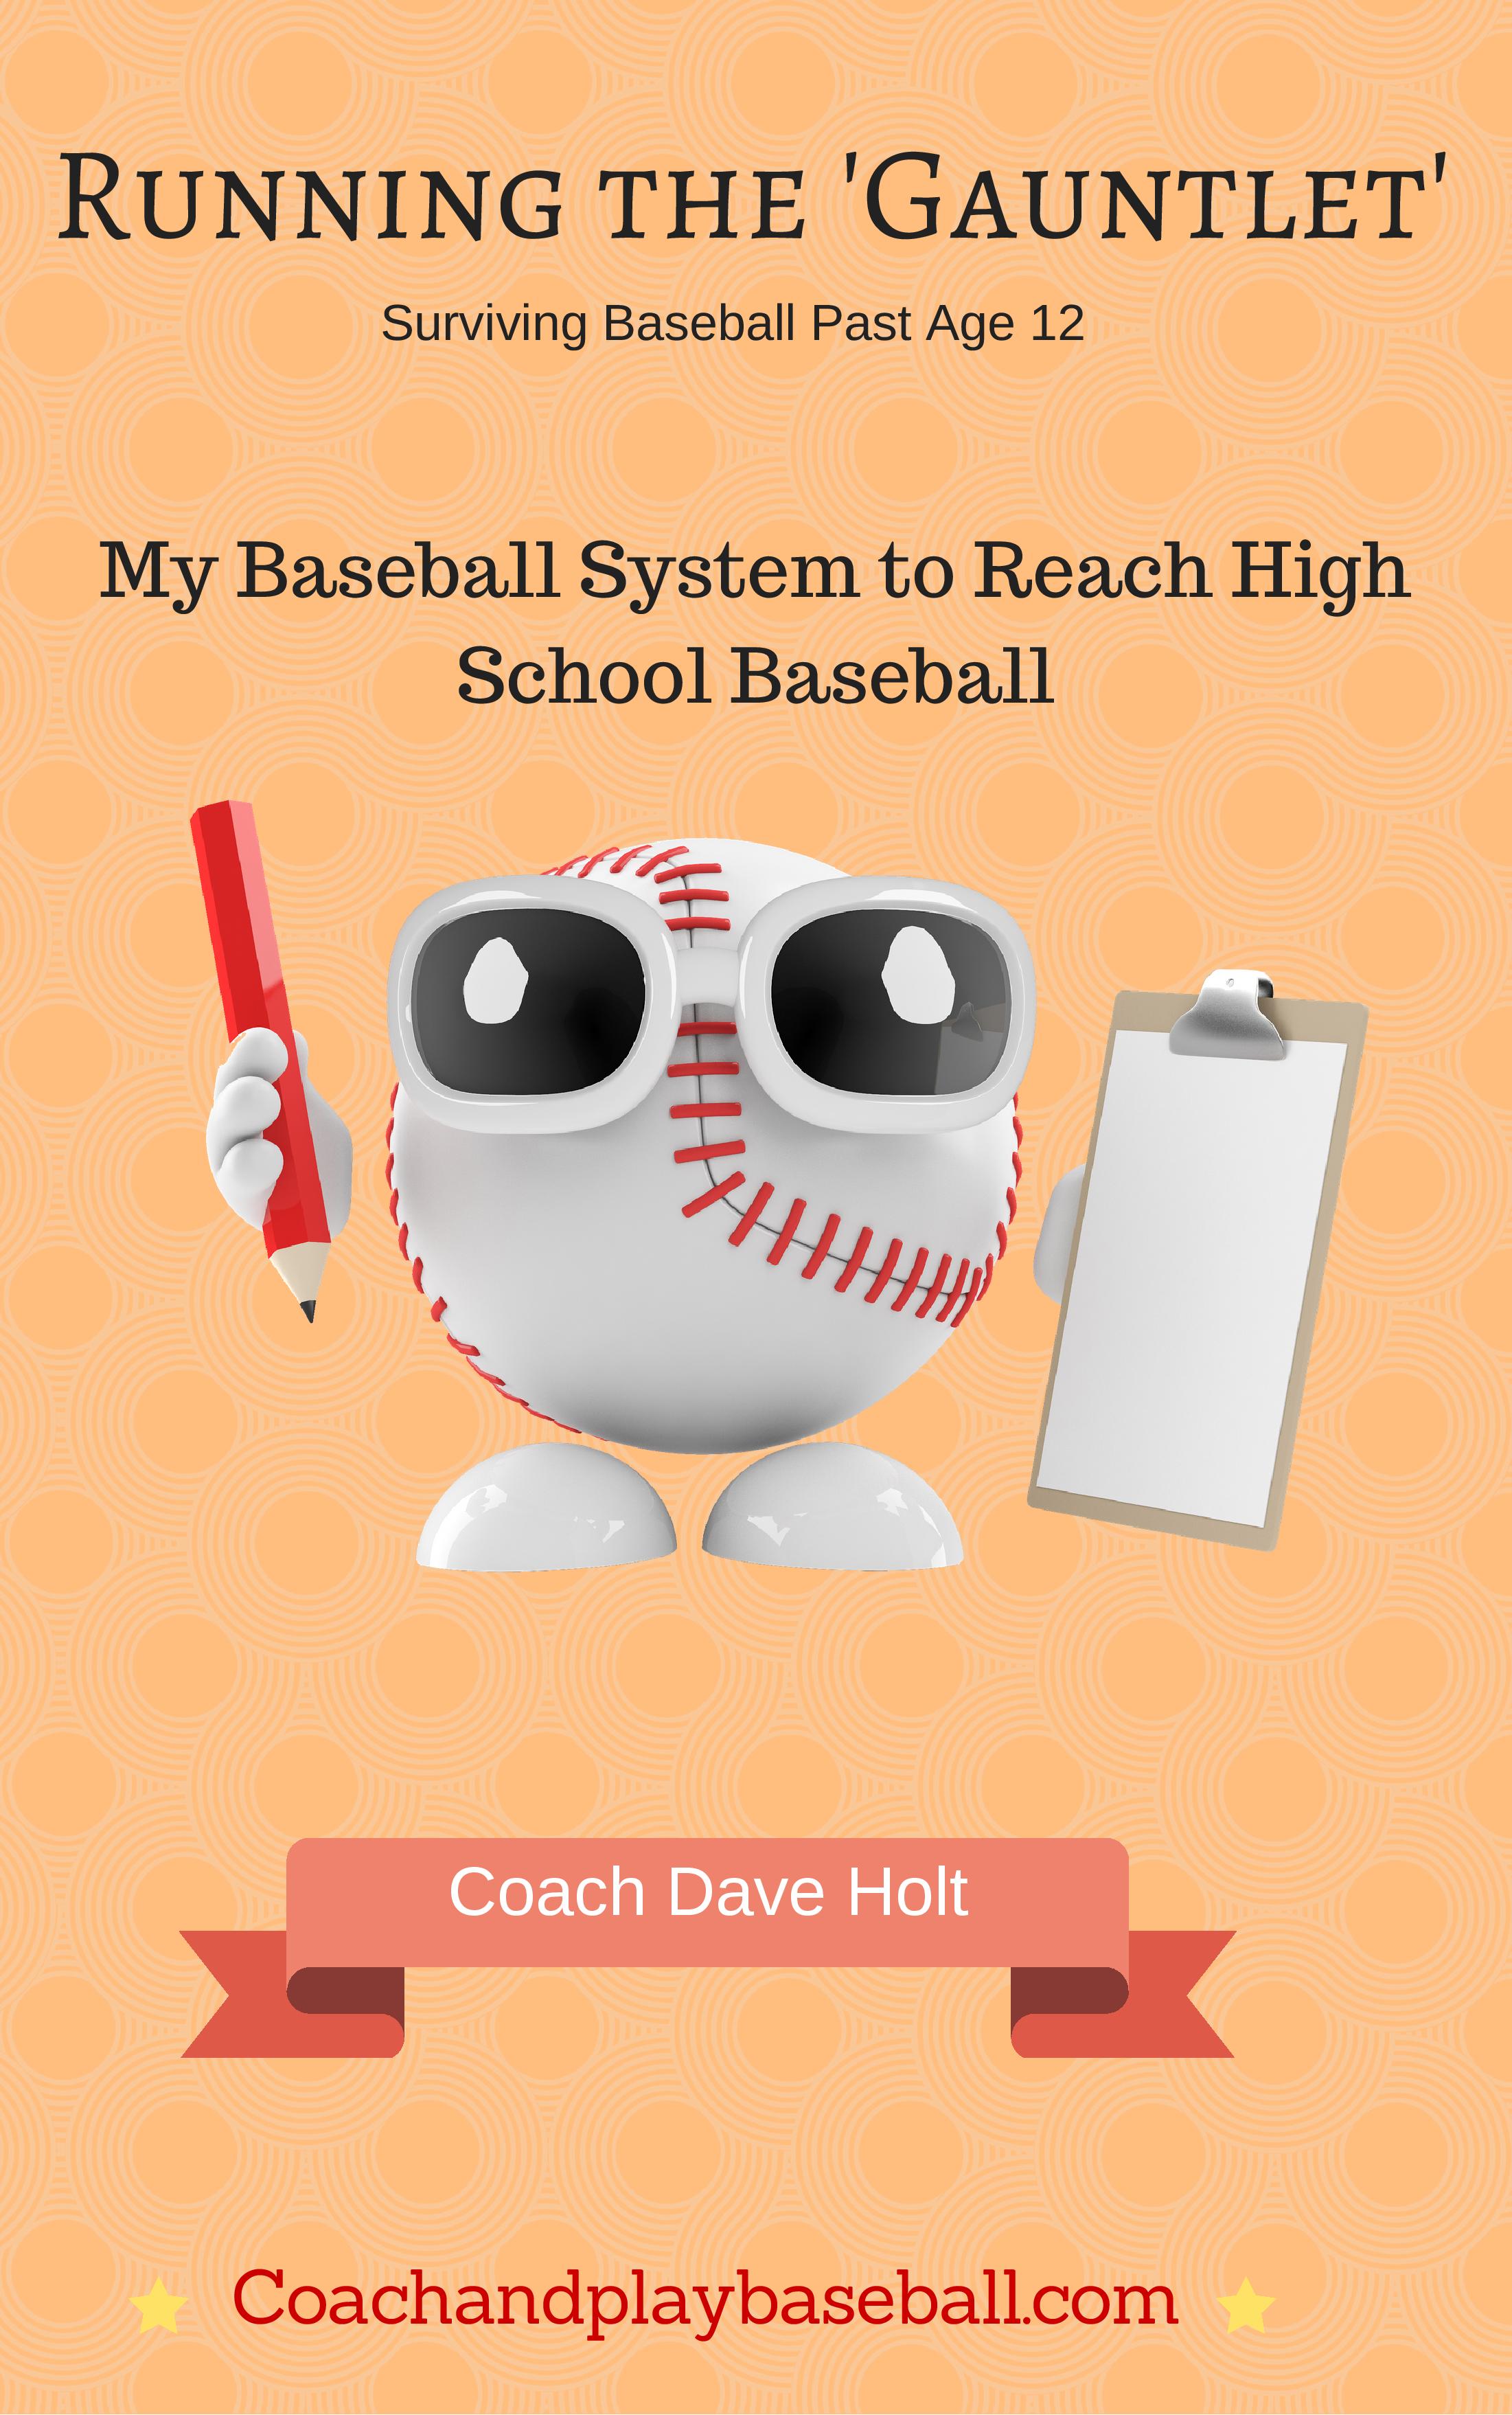 Running the 'Gauntlet' My Player Development System to reach high school baseball.